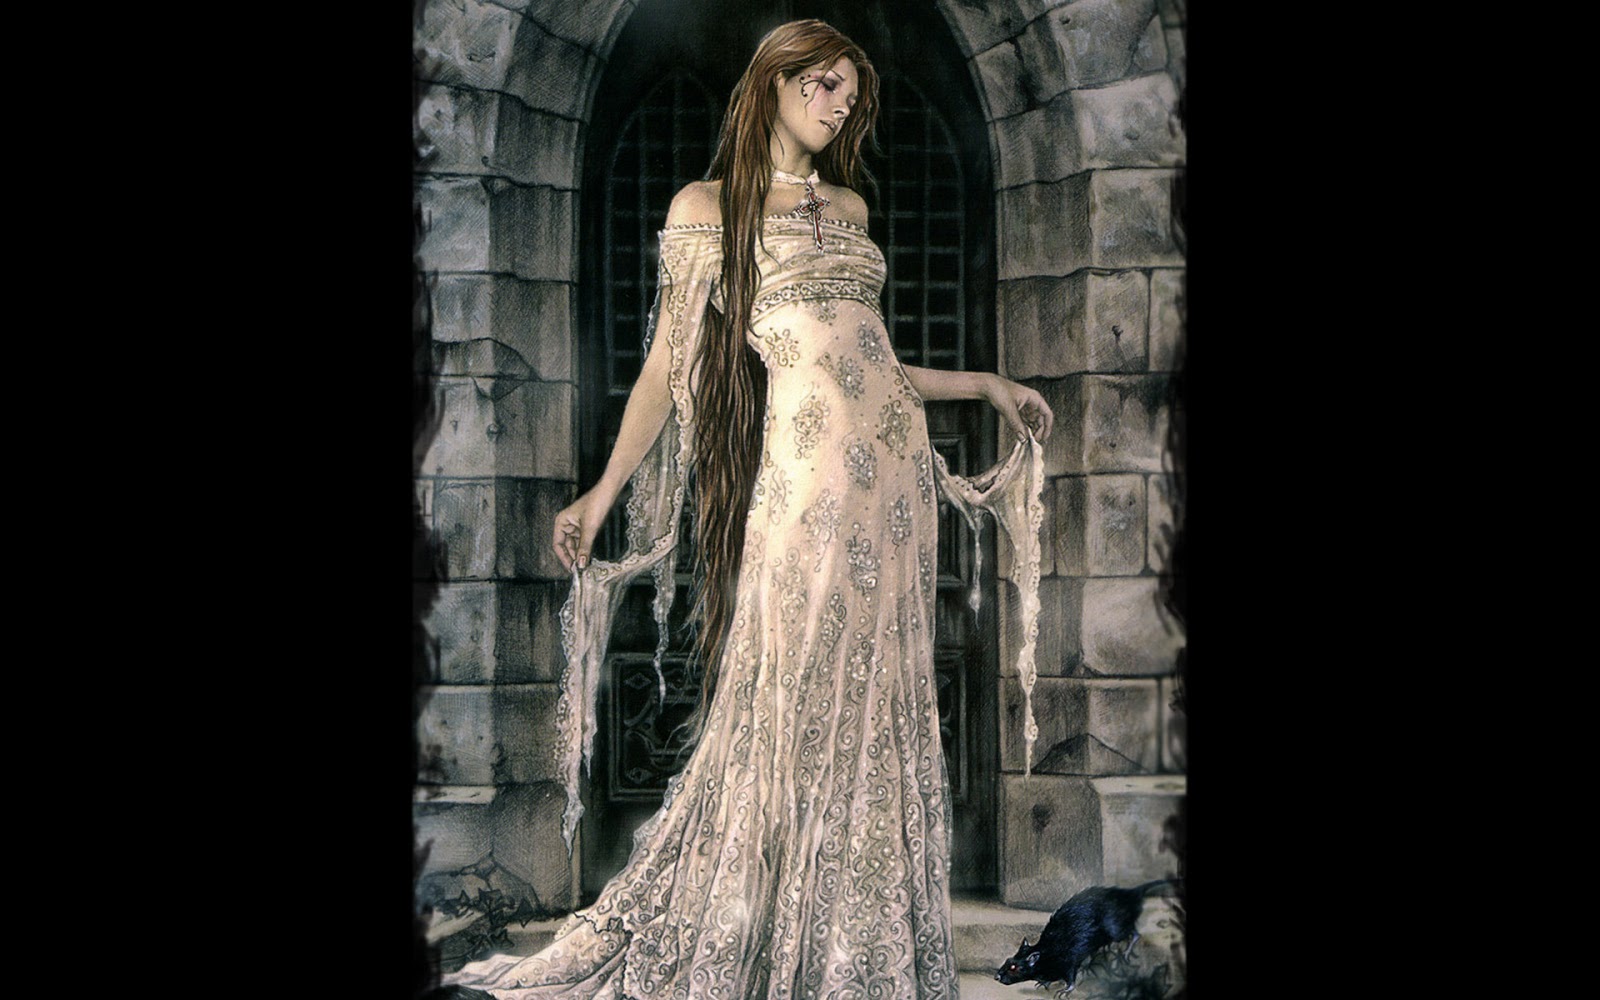 Gothic Fantasy Girl by Victoria Francés